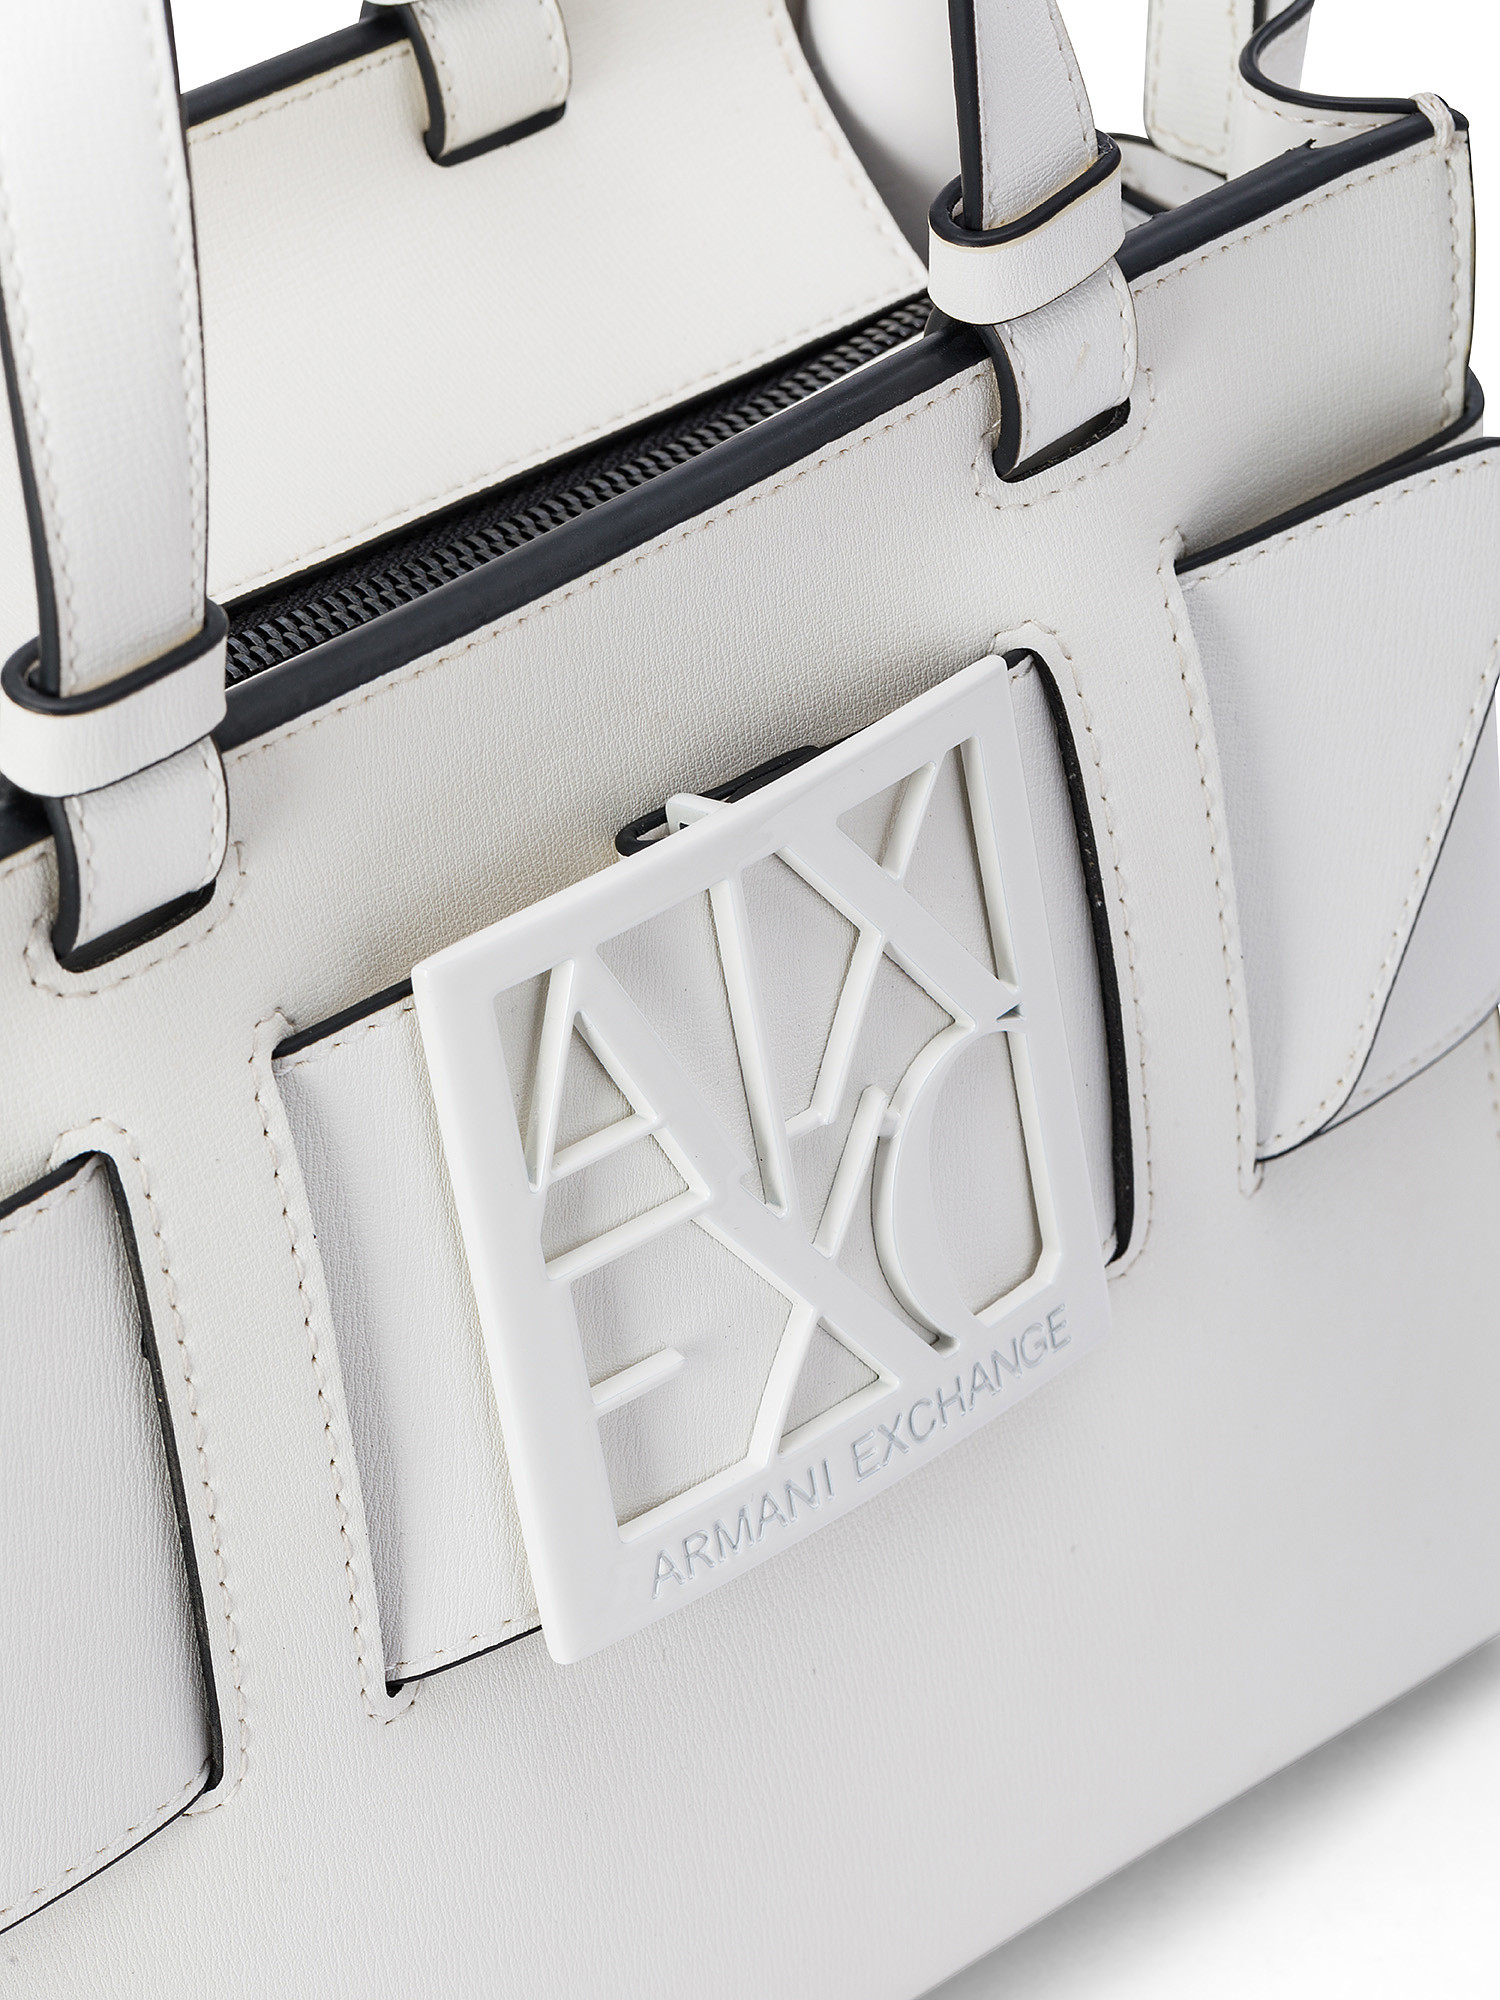 Armani Exchange - Tote bag media con logo, Bianco ghiaccio, large image number 2